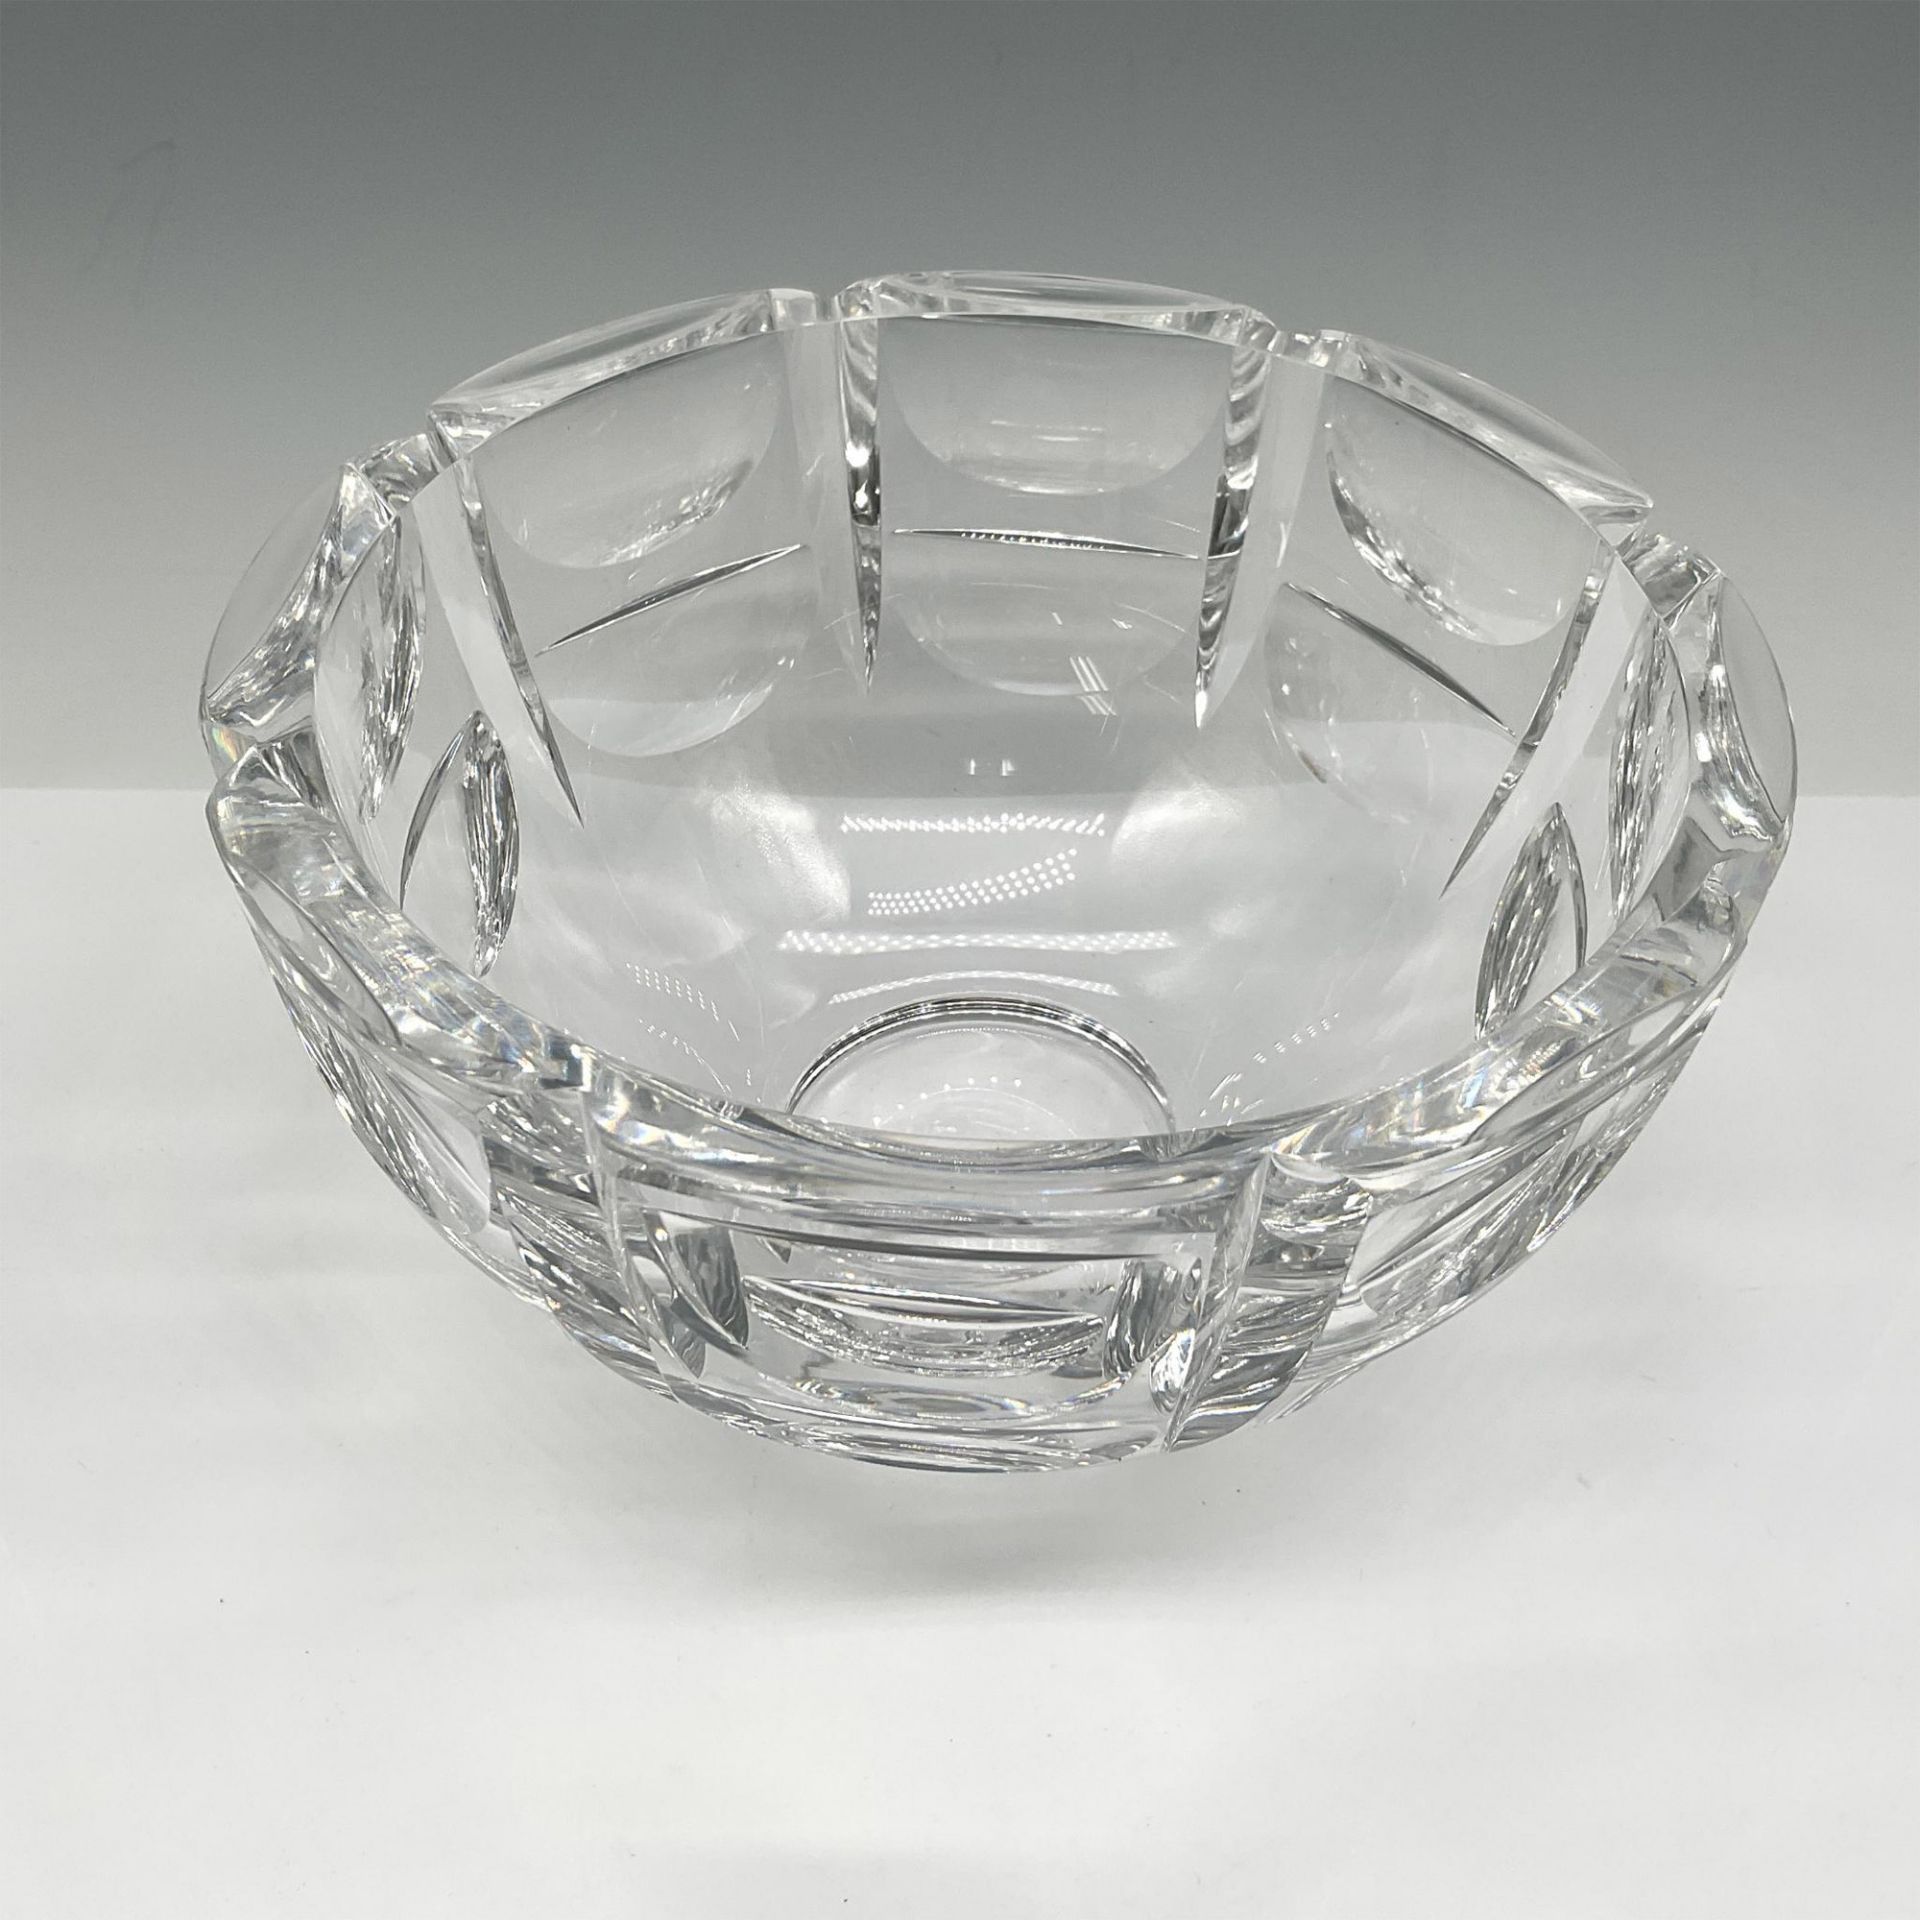 Kosta Boda Crystal Bowl, Large - Image 2 of 3